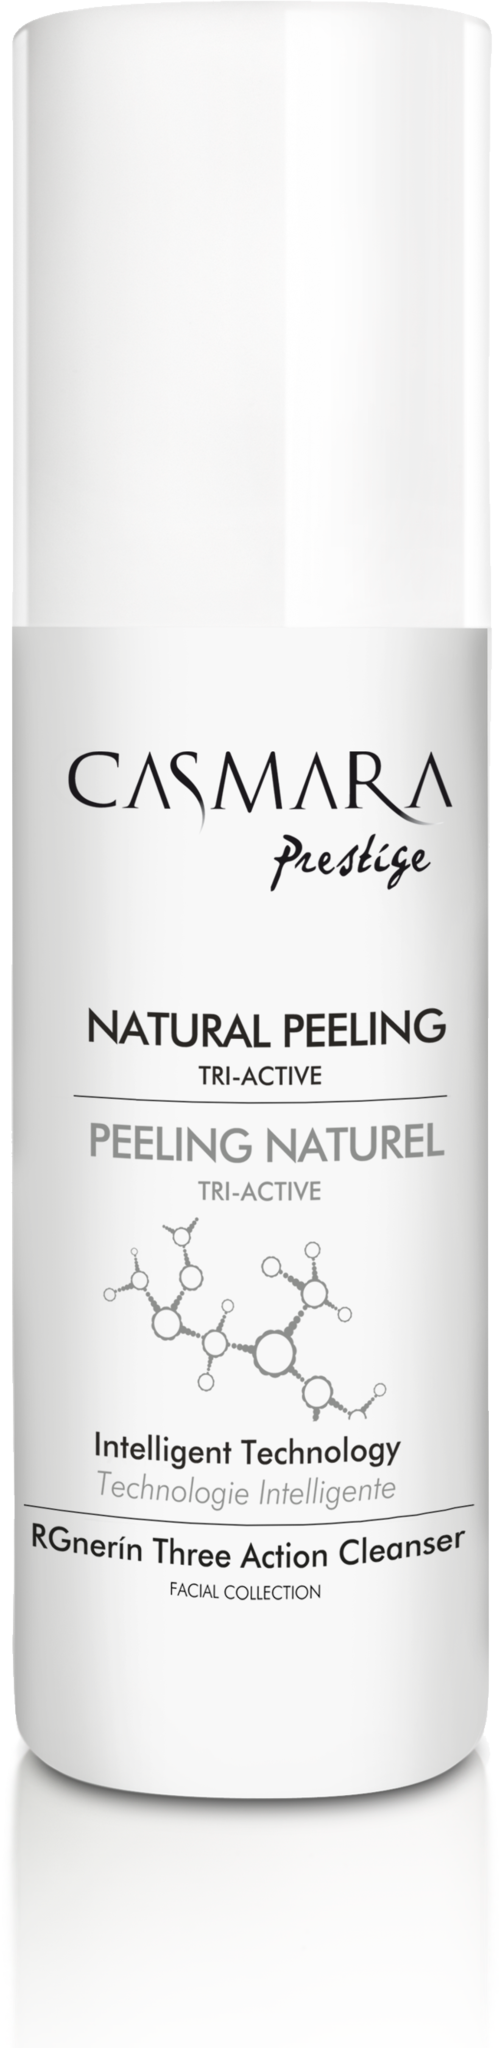 Natural peeling. Casmara tri Active peeling. Casmara сыворотка для лица. Casmara Cleanser Balancing 3 in 1. Касмара ретинол пилинг.